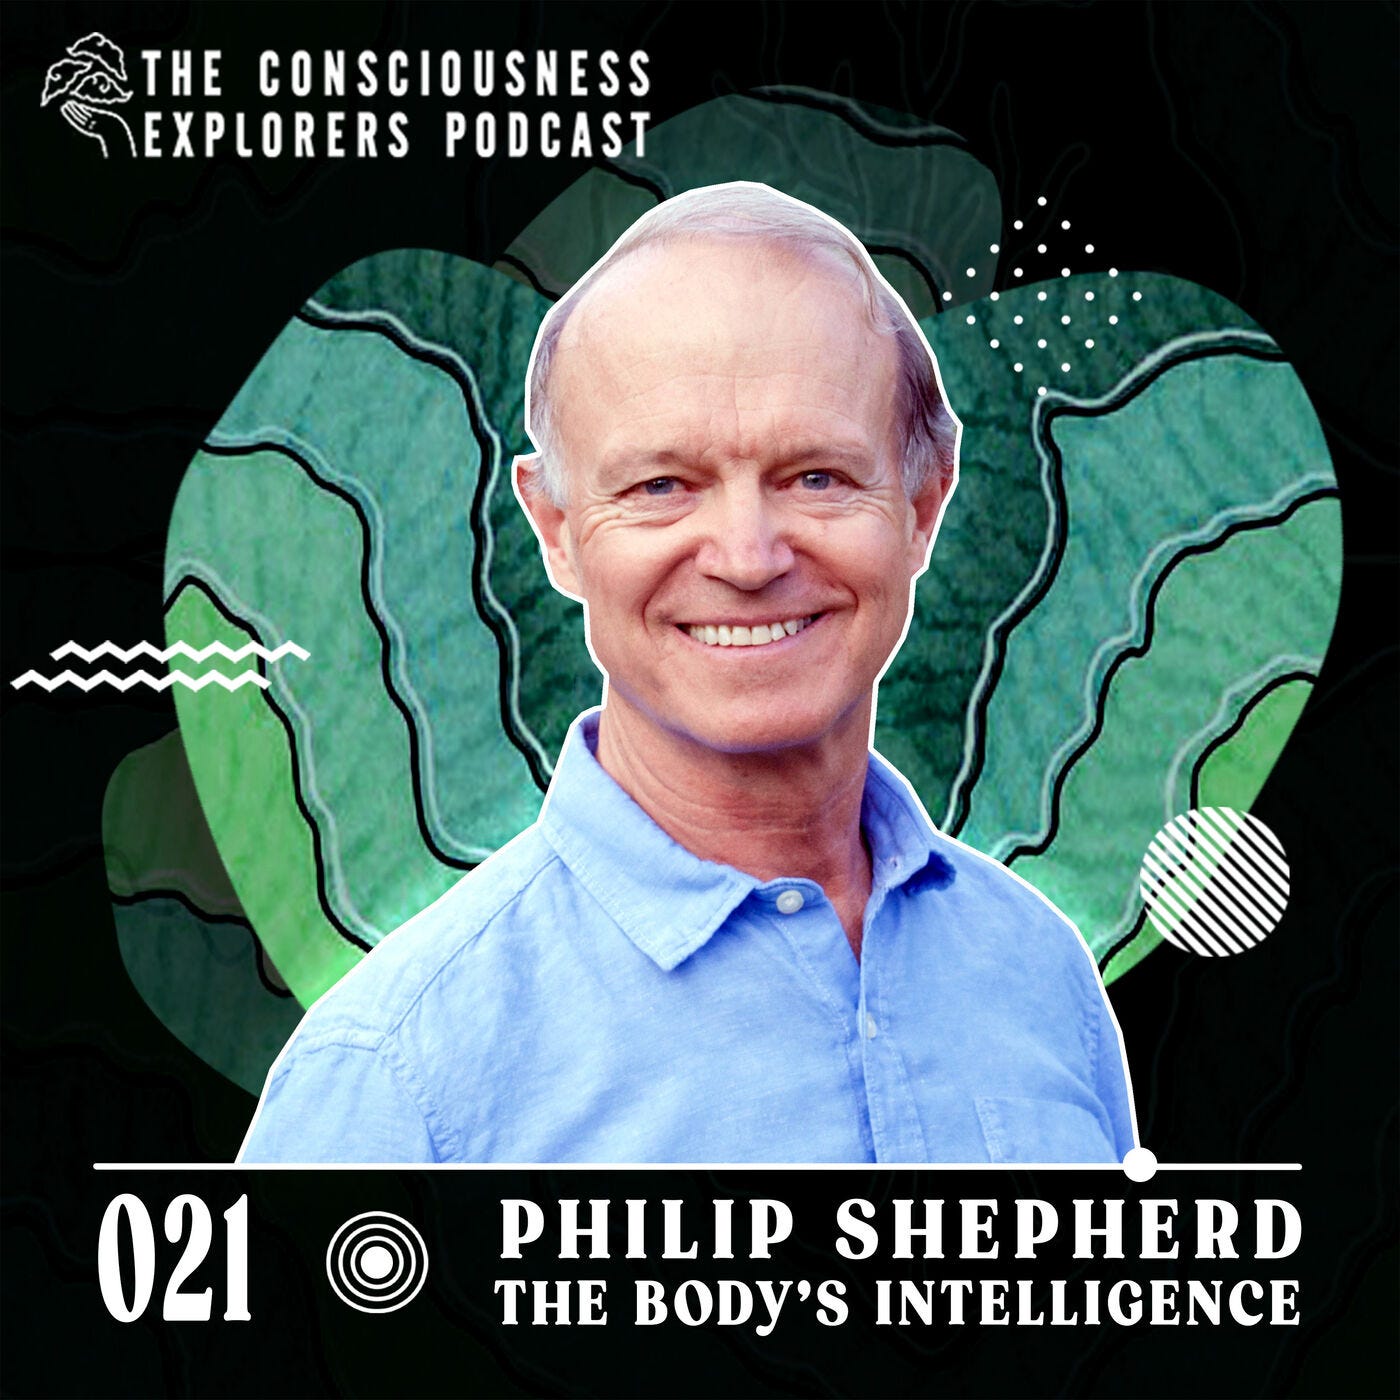 The Body's Intelligence with Philip Shepherd